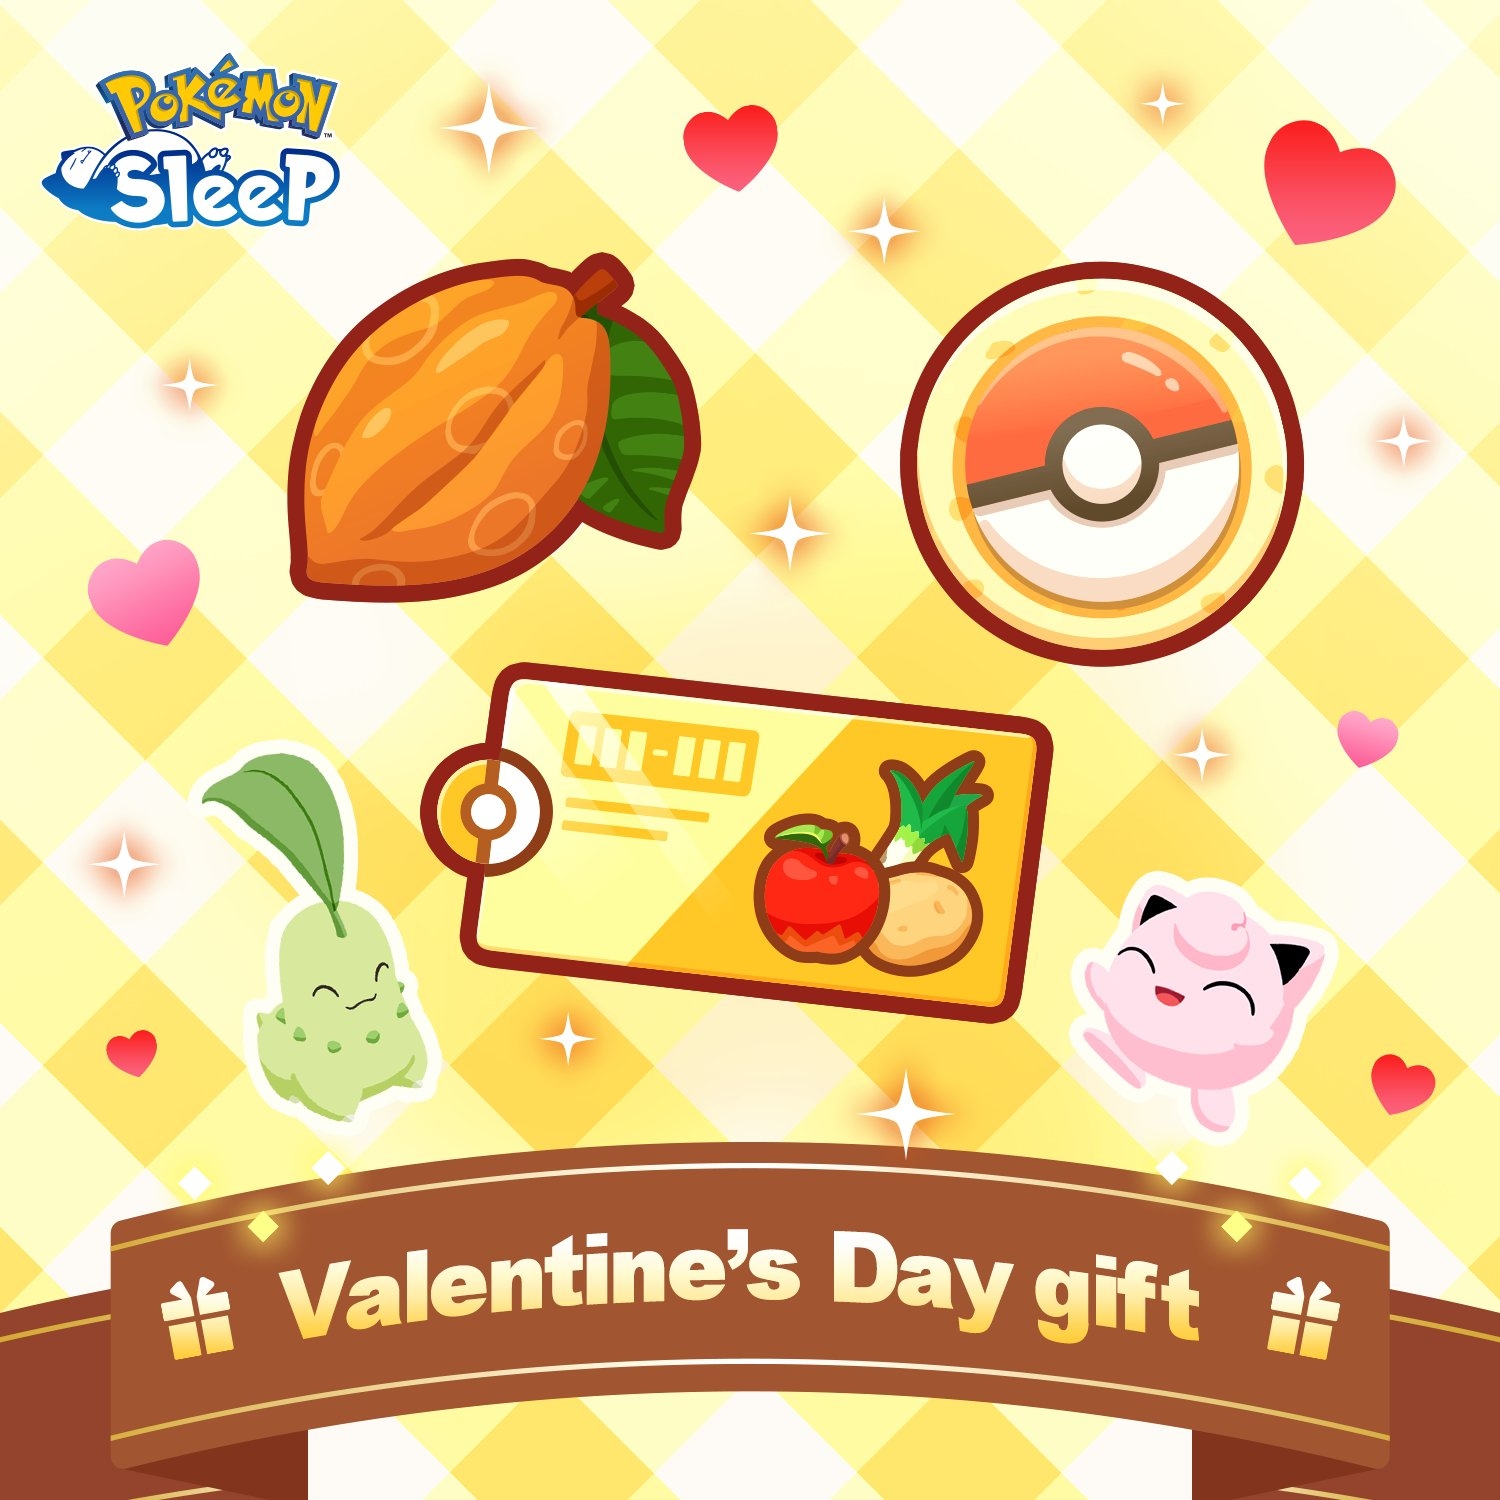 Pokémon Sleep - Valentine's Day gift